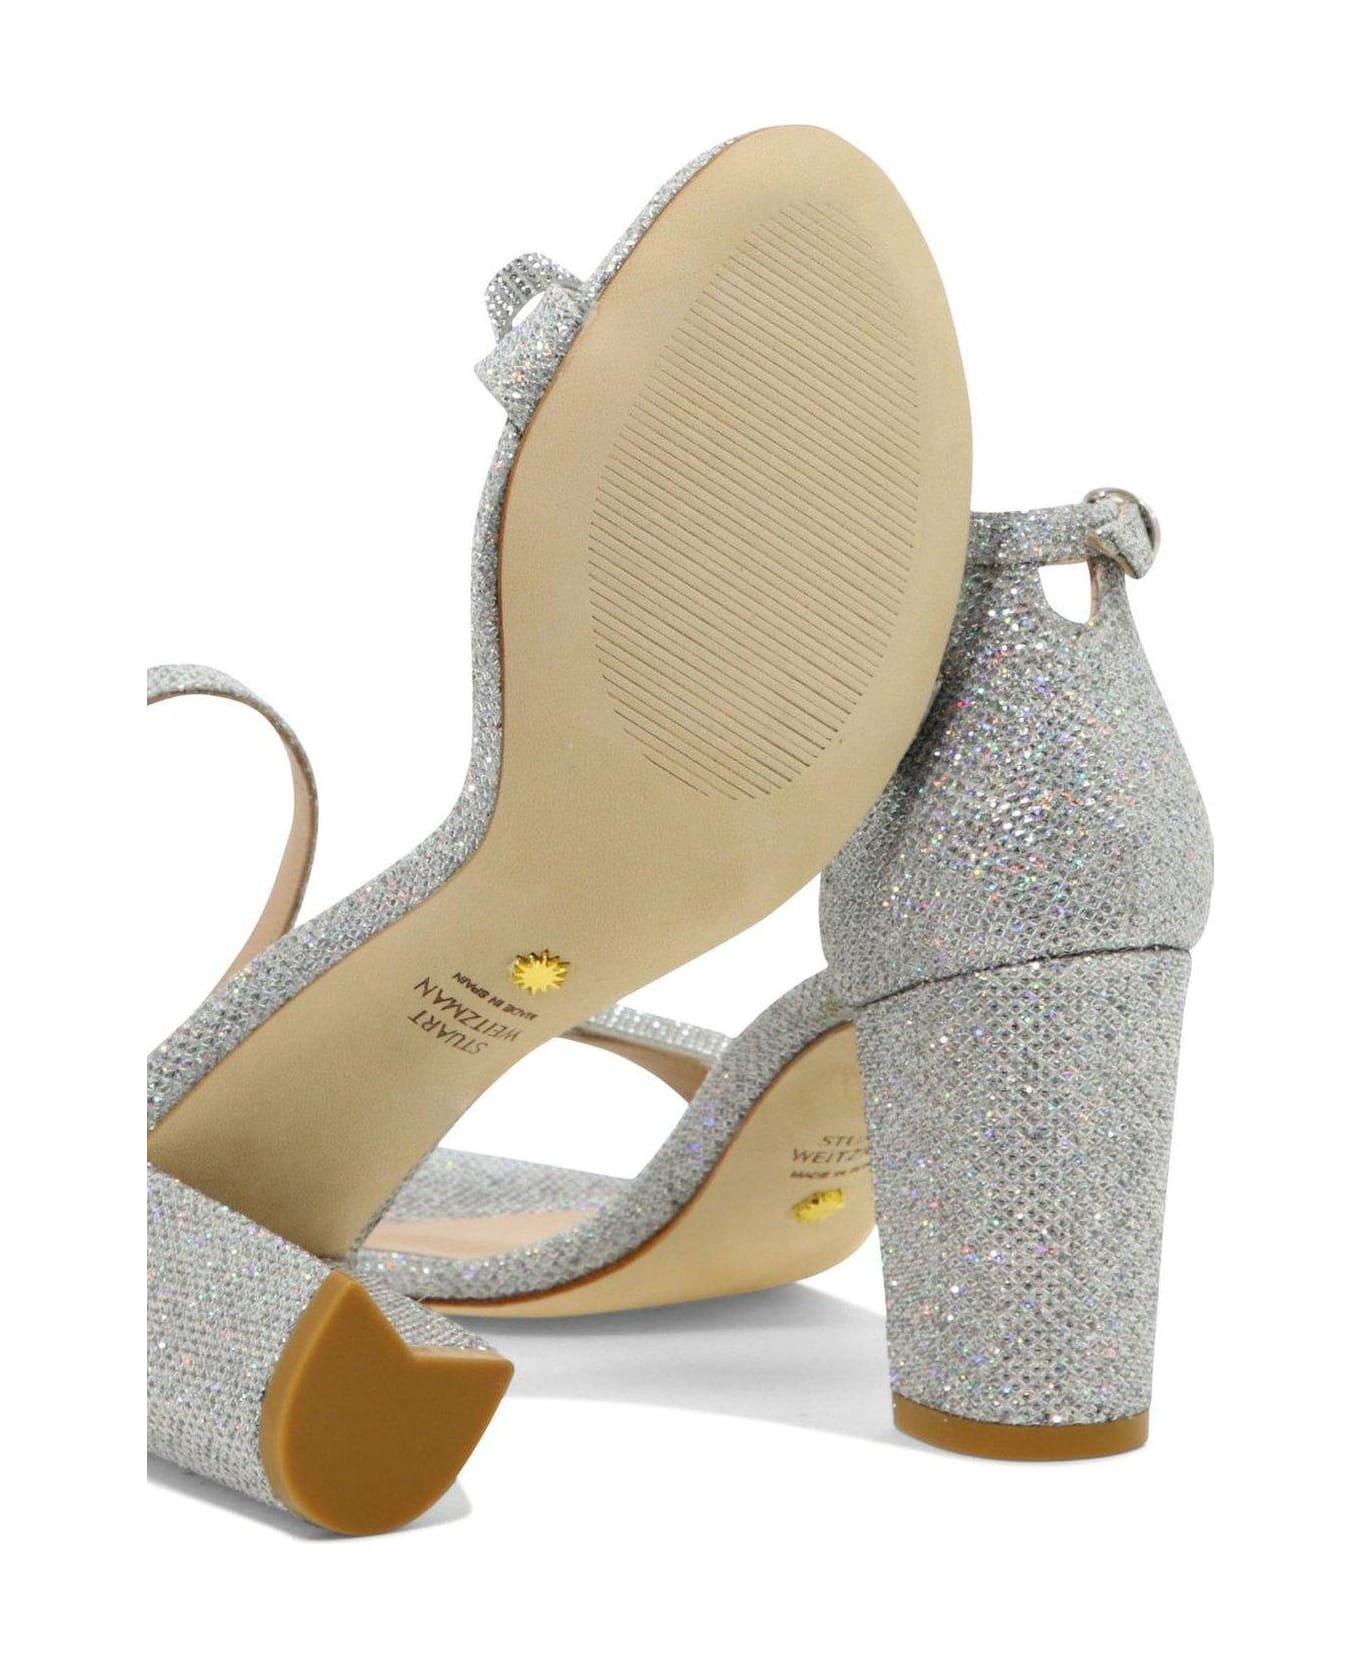 Stuart Weitzman Nearlynude Bow Strap Heeled Sandals - Crystal Silver サンダル